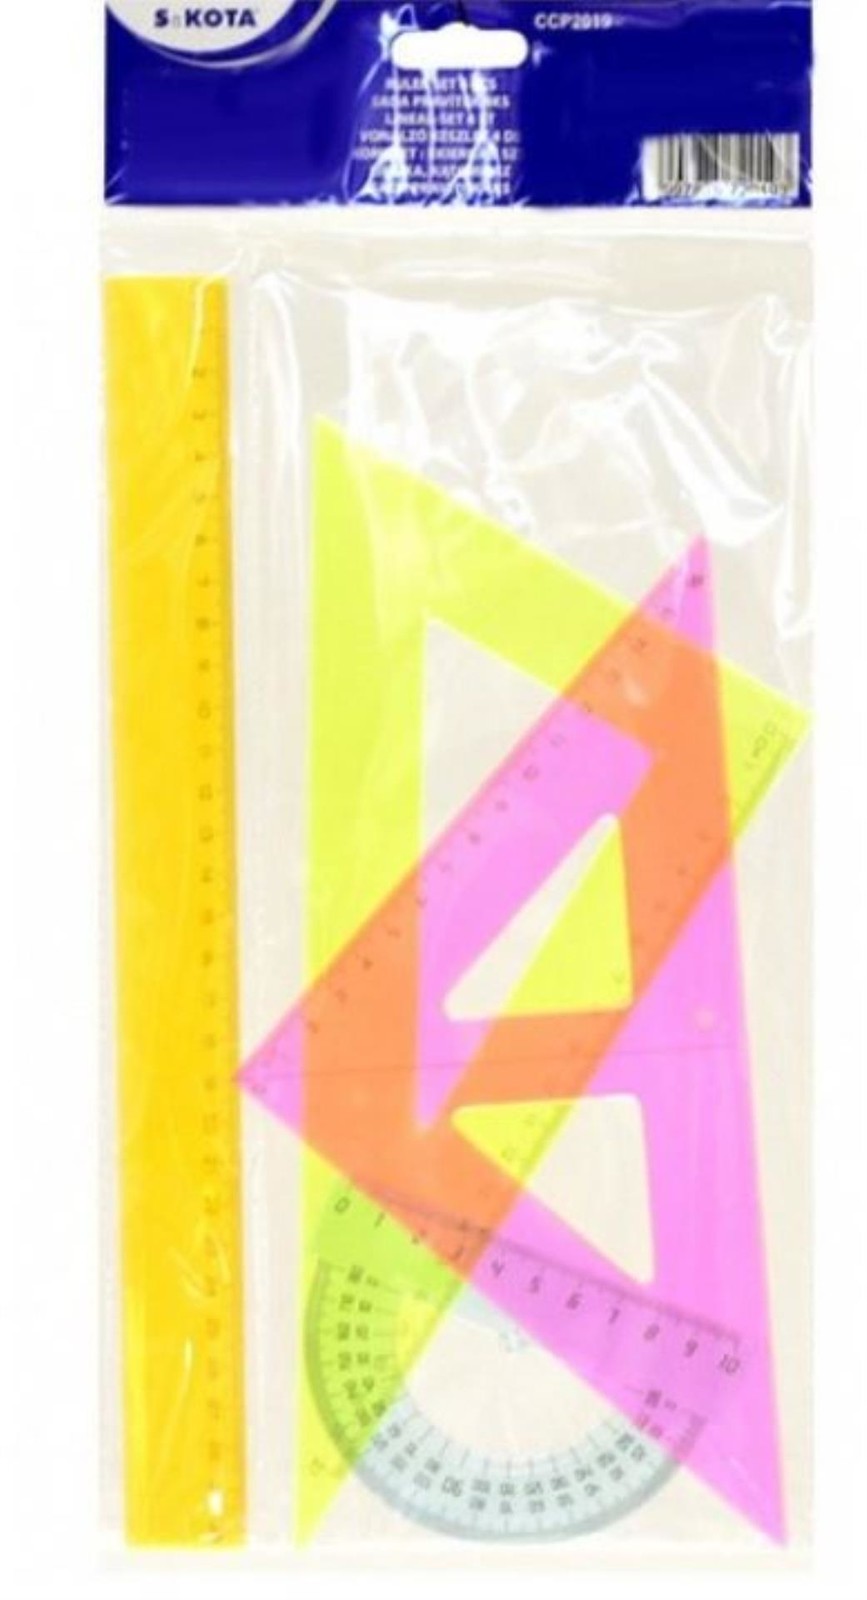 Sakota  Sada pravítek neon - trojúhelník, trojúhelník s ryskou, pravítko, úhloměr, 4 ks